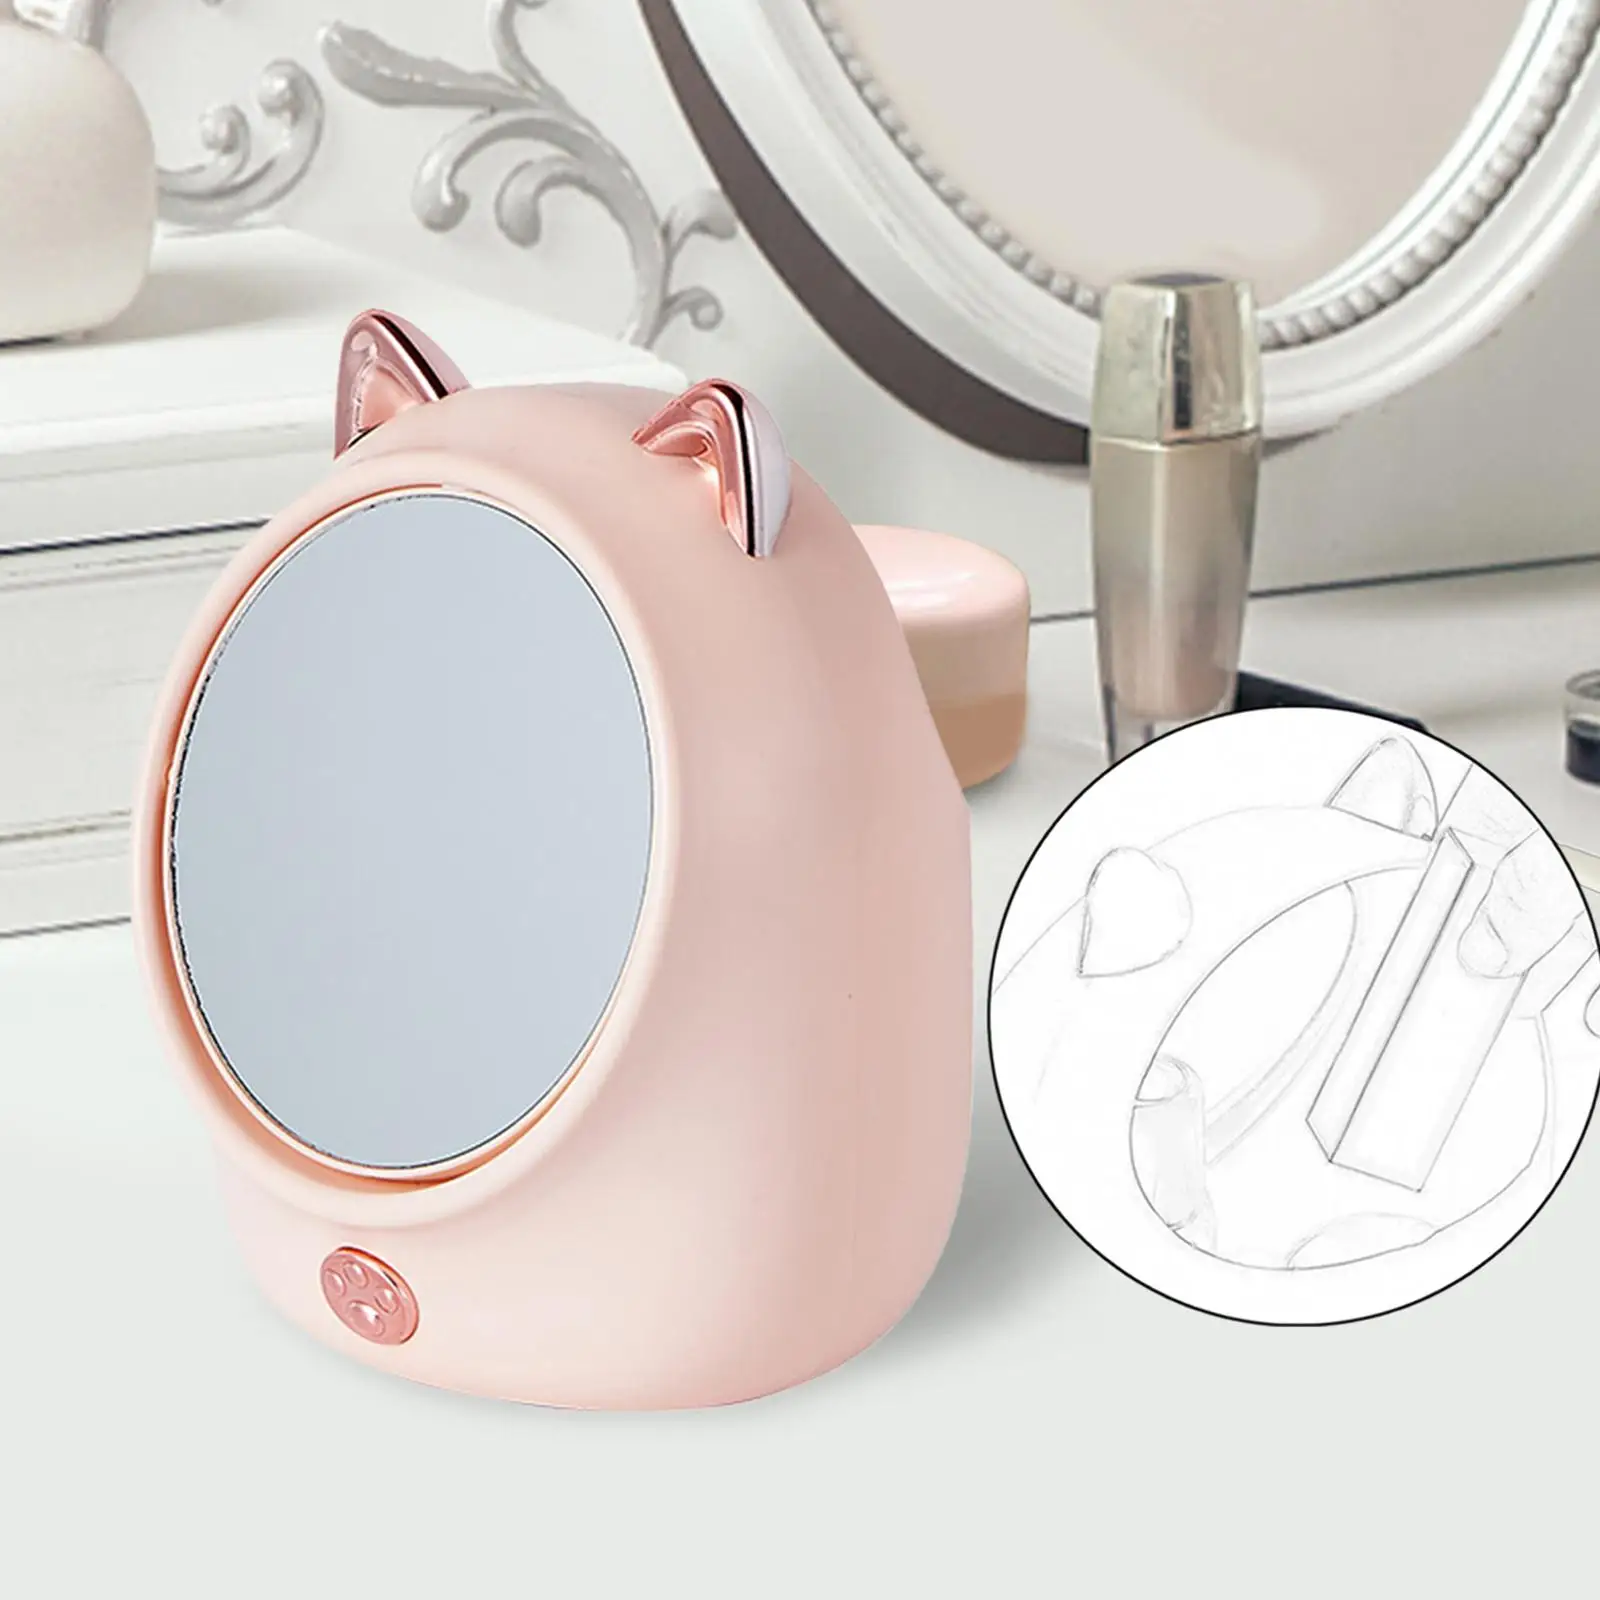 Makeup Storage Box with Double Sided Mirror Vanity Mirror 360 Degree Swivel Jewelry Organizer for Desk Dresser Bedroom Bathroom